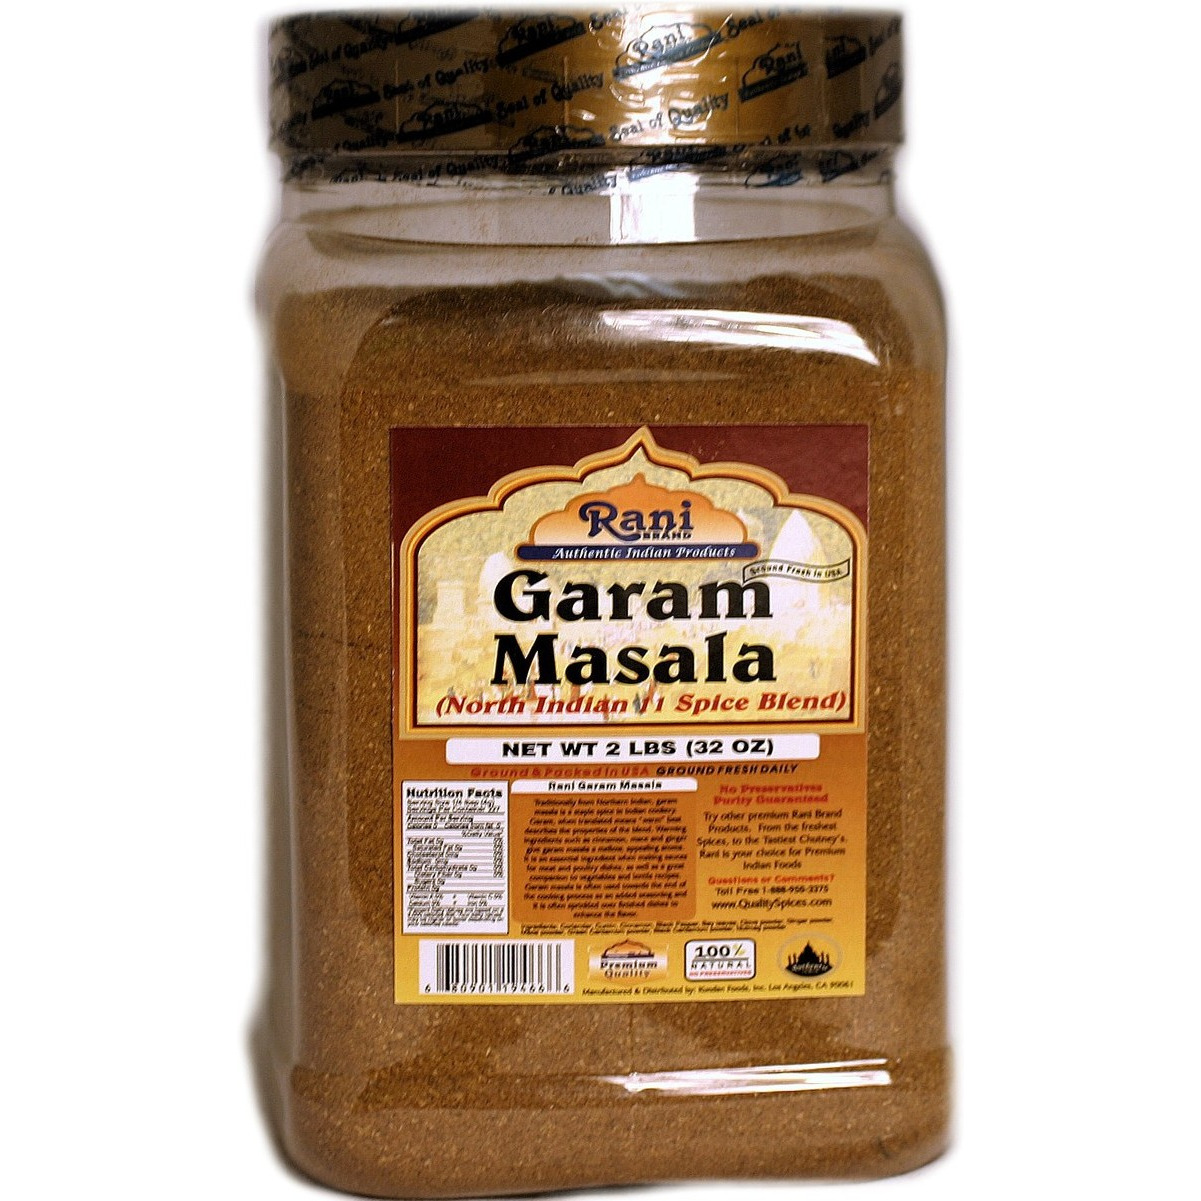 Rani Garam Masala Indian 11 Spice Blend 2lbs (32oz) 908g All Natural | Gluten Friendly | Salt Free | NON-GMO